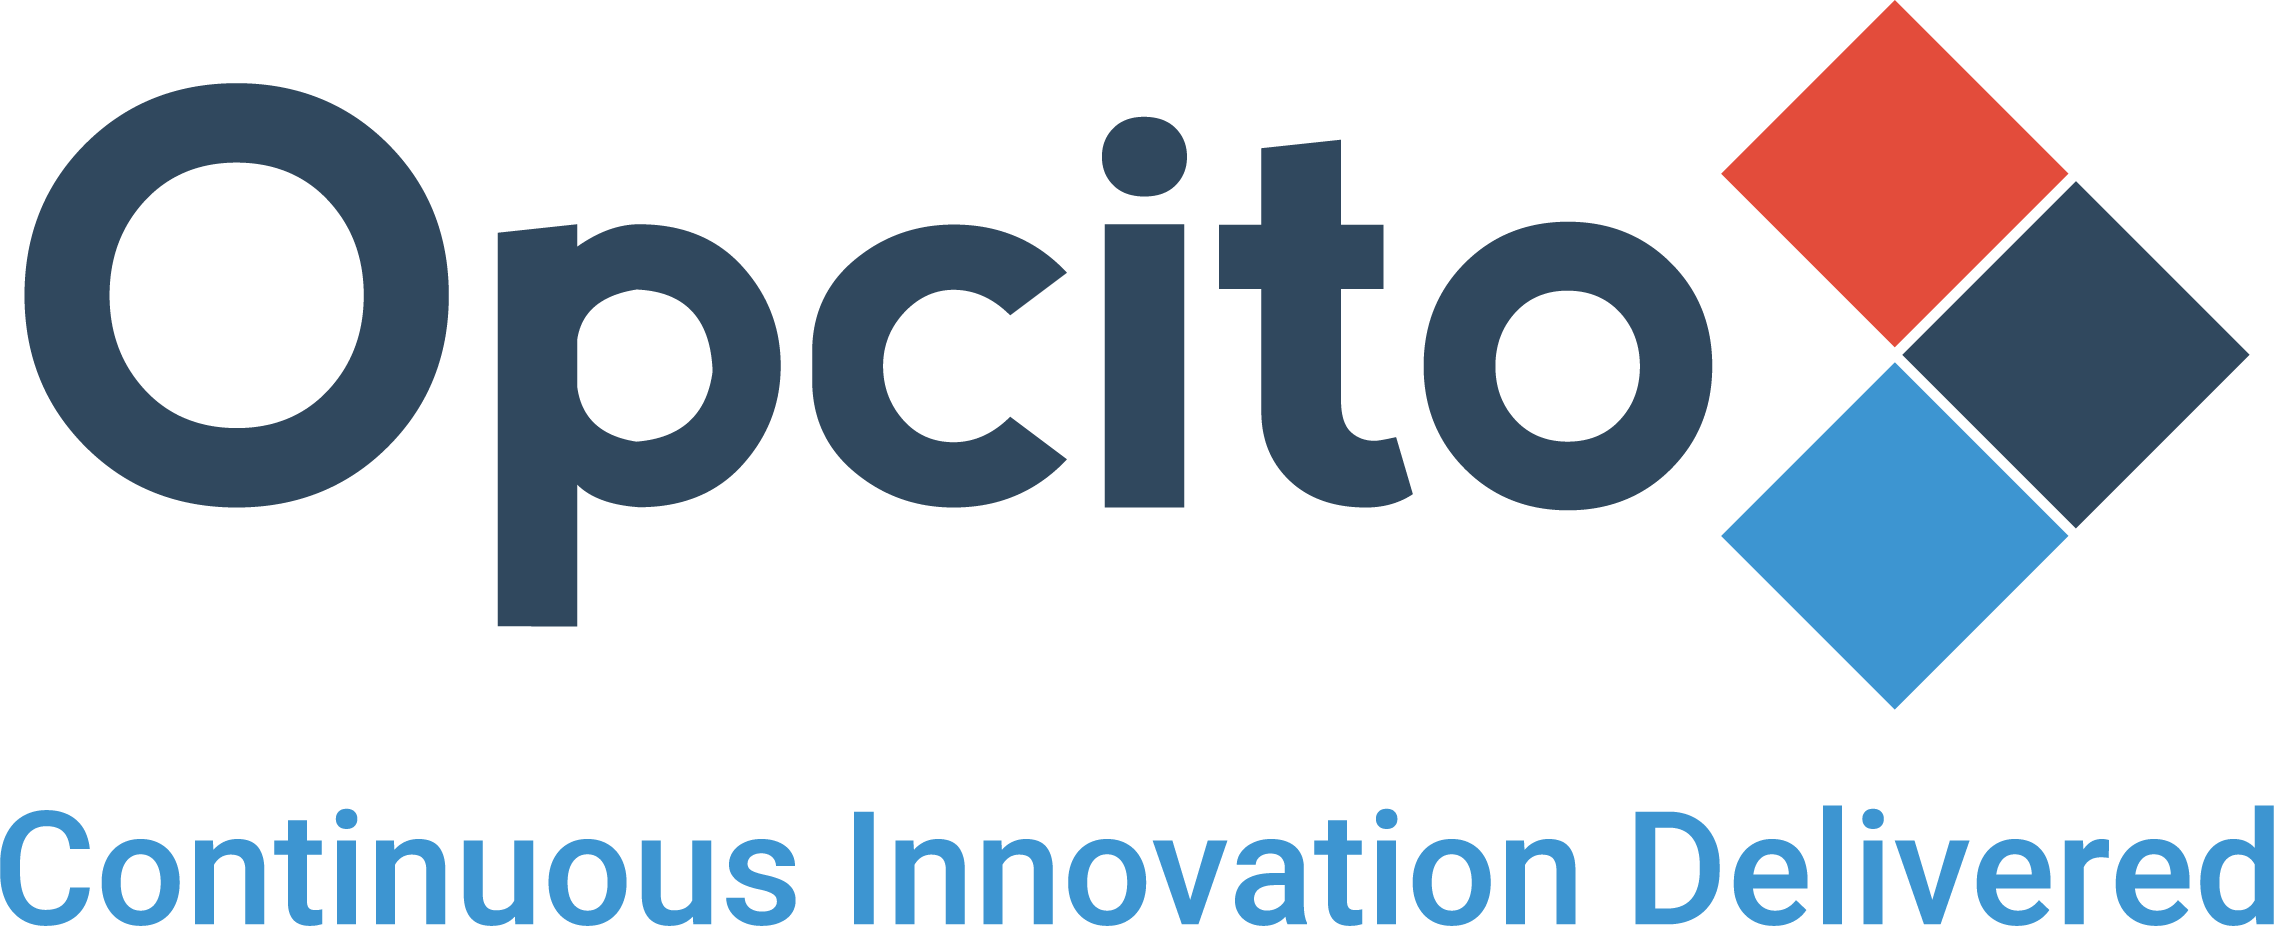 Opcito Technologies Logo